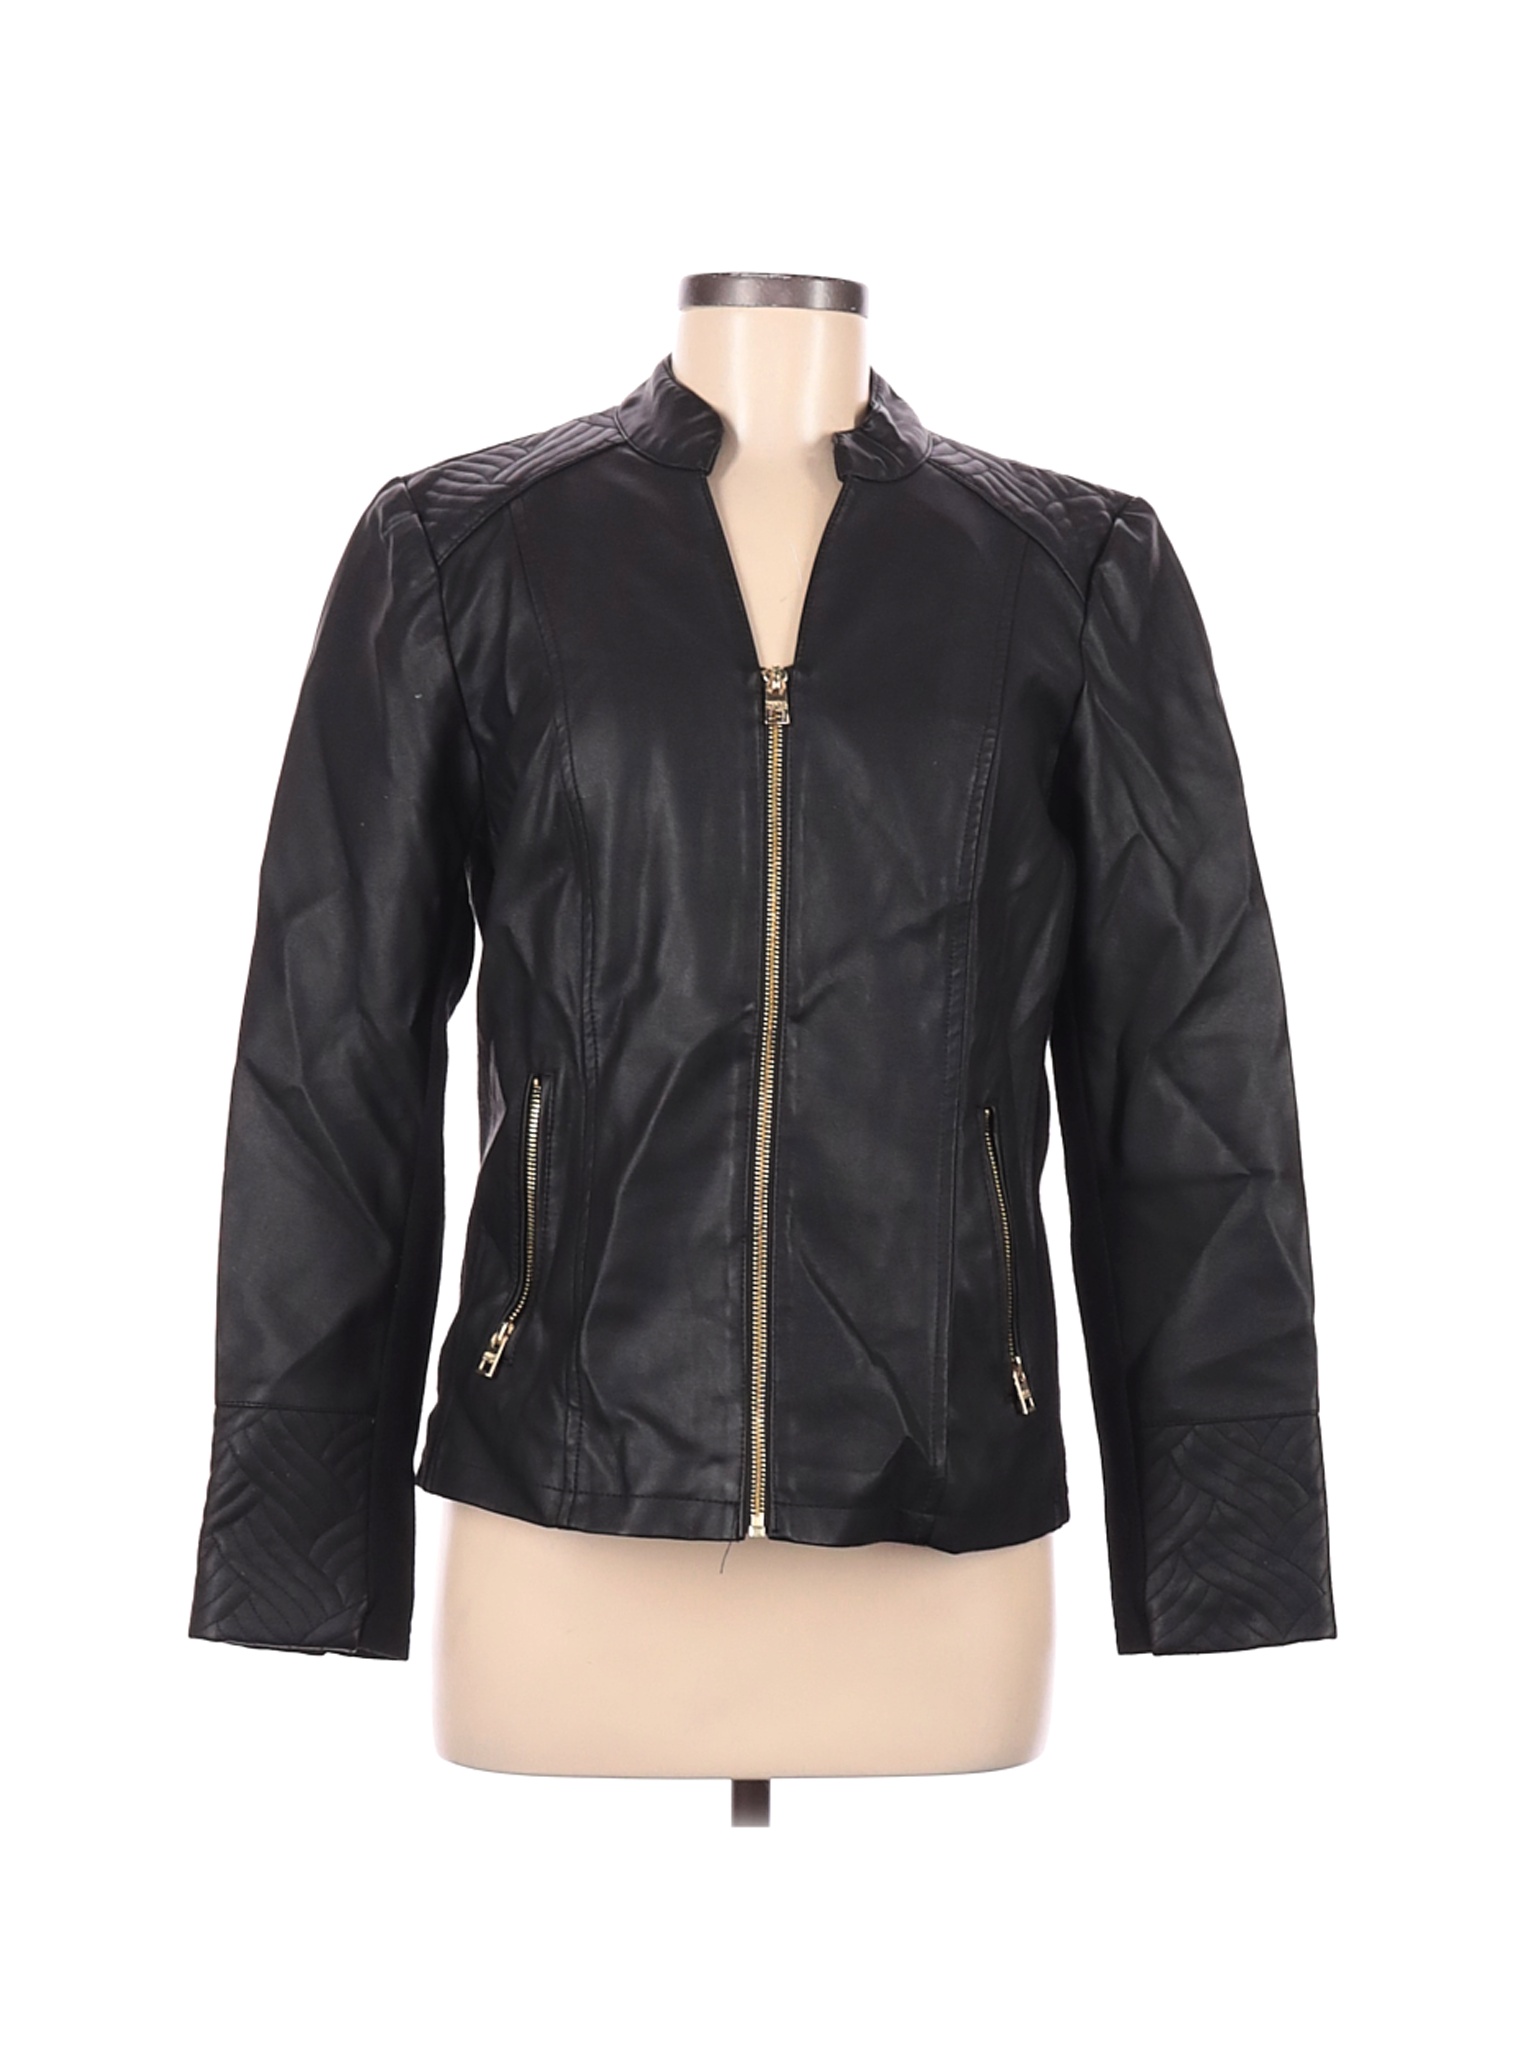 Marc New York Women Black Faux Leather Jacket M | eBay